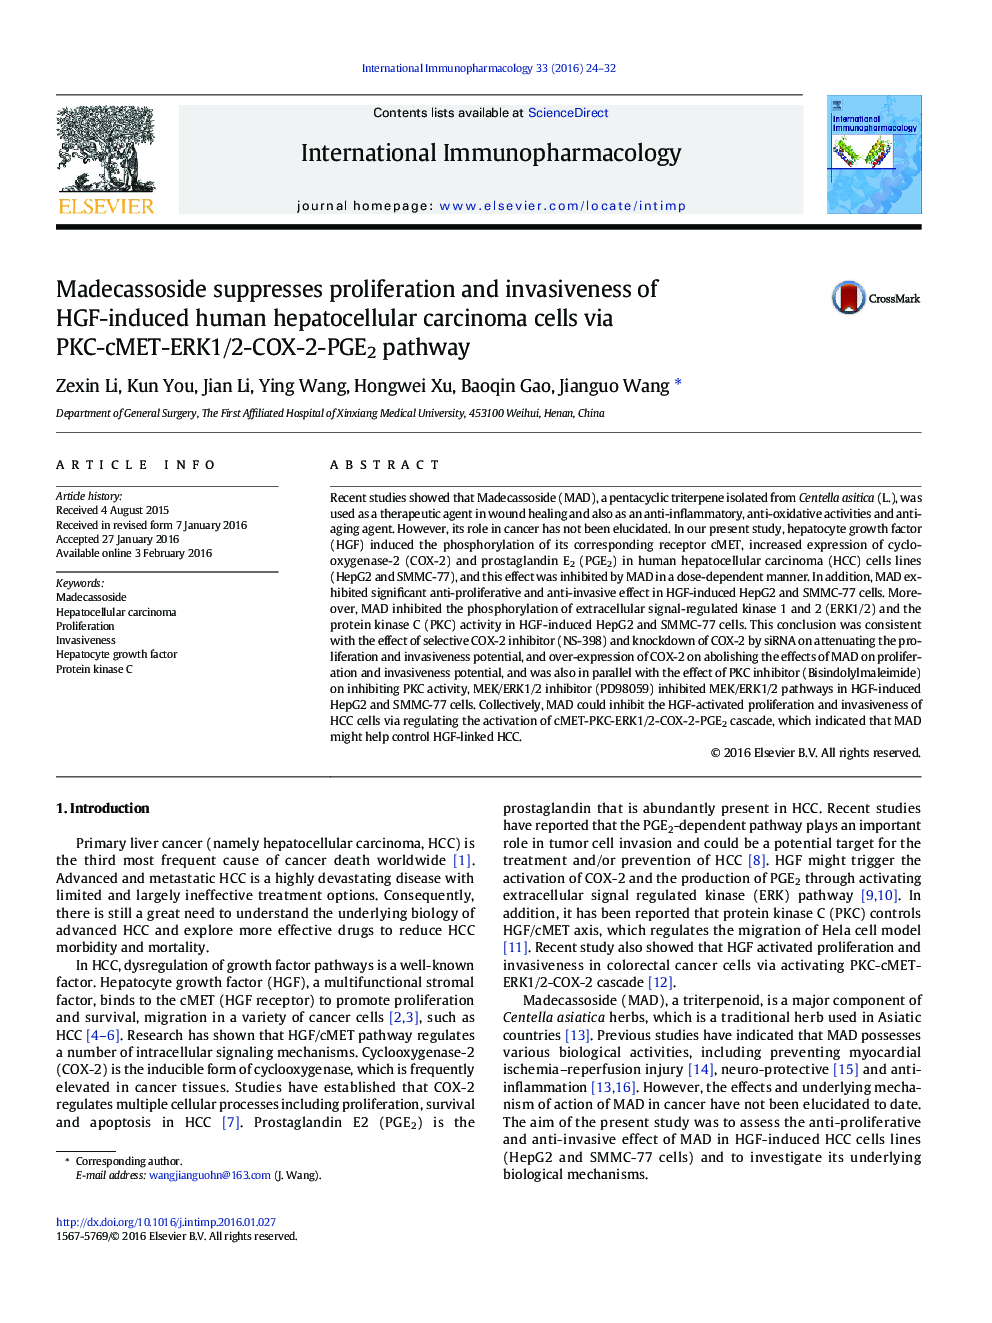 Madecassoside suppresses proliferation and invasiveness of HGF-induced human hepatocellular carcinoma cells via PKC-cMET-ERK1/2-COX-2-PGE2 pathway